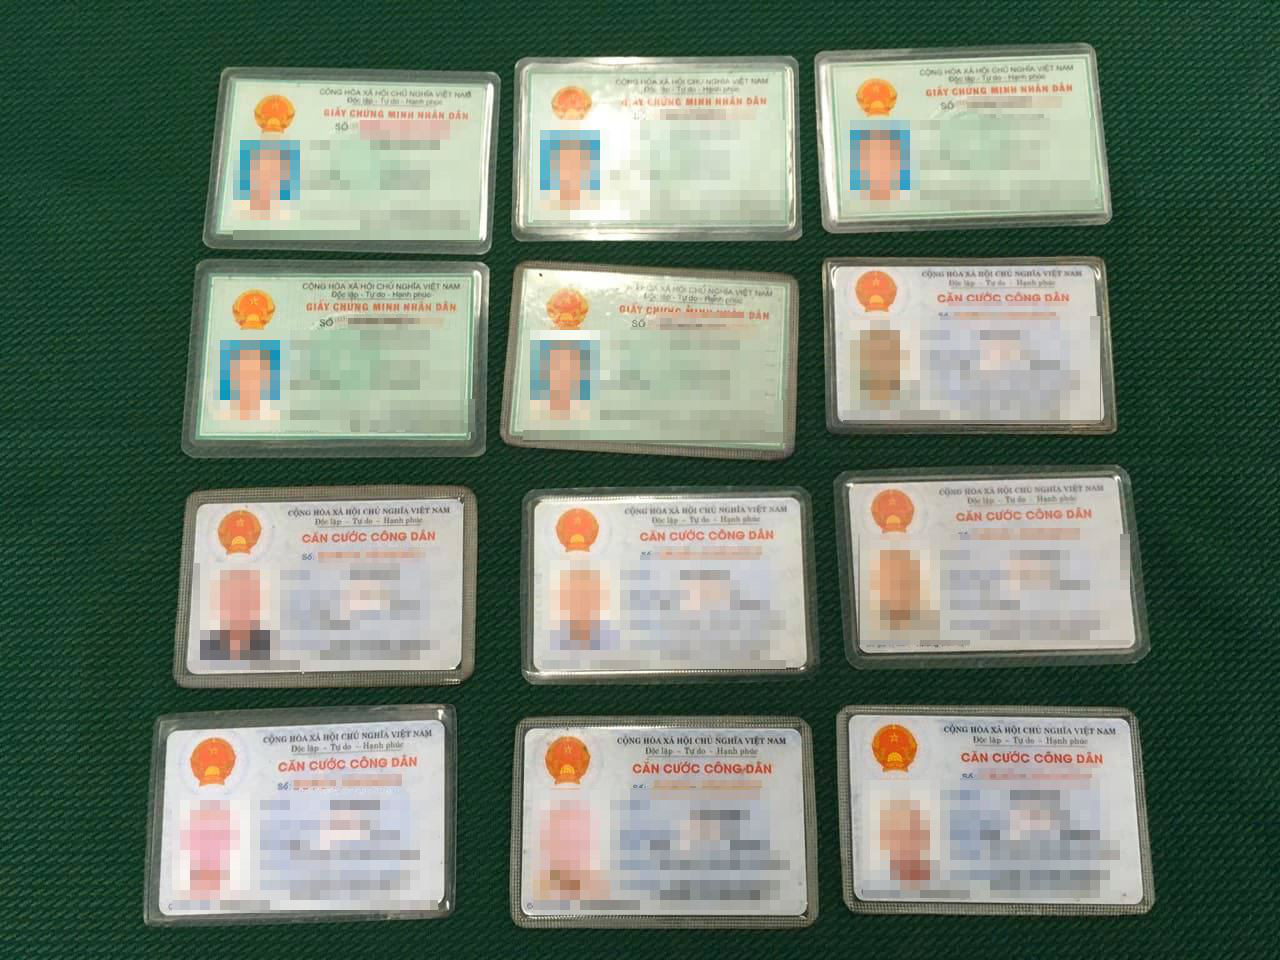 Saigon ‘beggar’ found with 12 ID cards